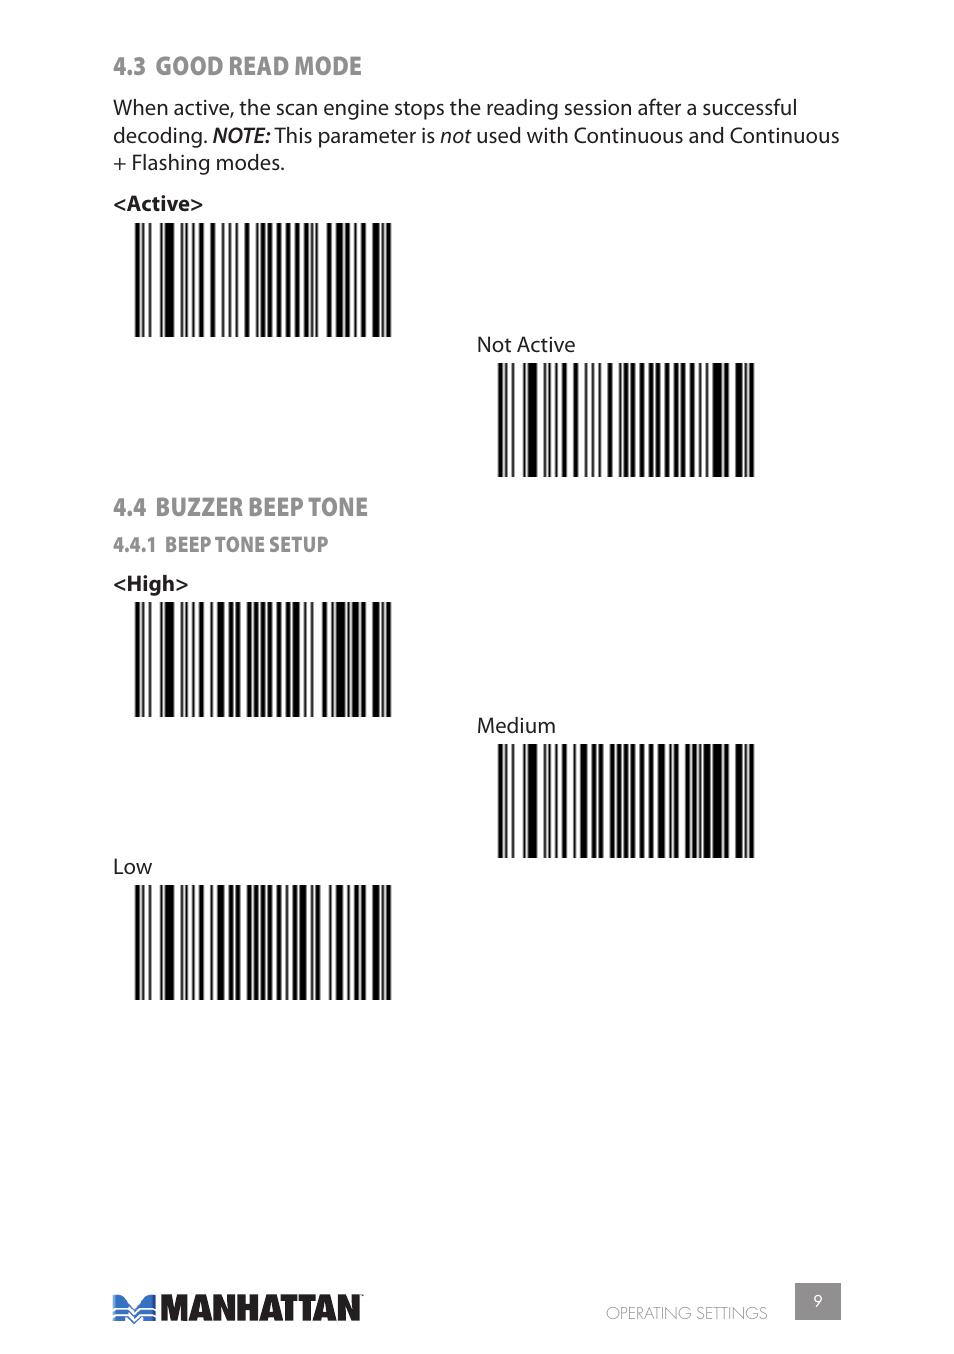 3 good read mode, 4 buzzer beep tone | Manhattan 177603 2D Barcode Scanner  - Manual User Manual | Page 9 / 80